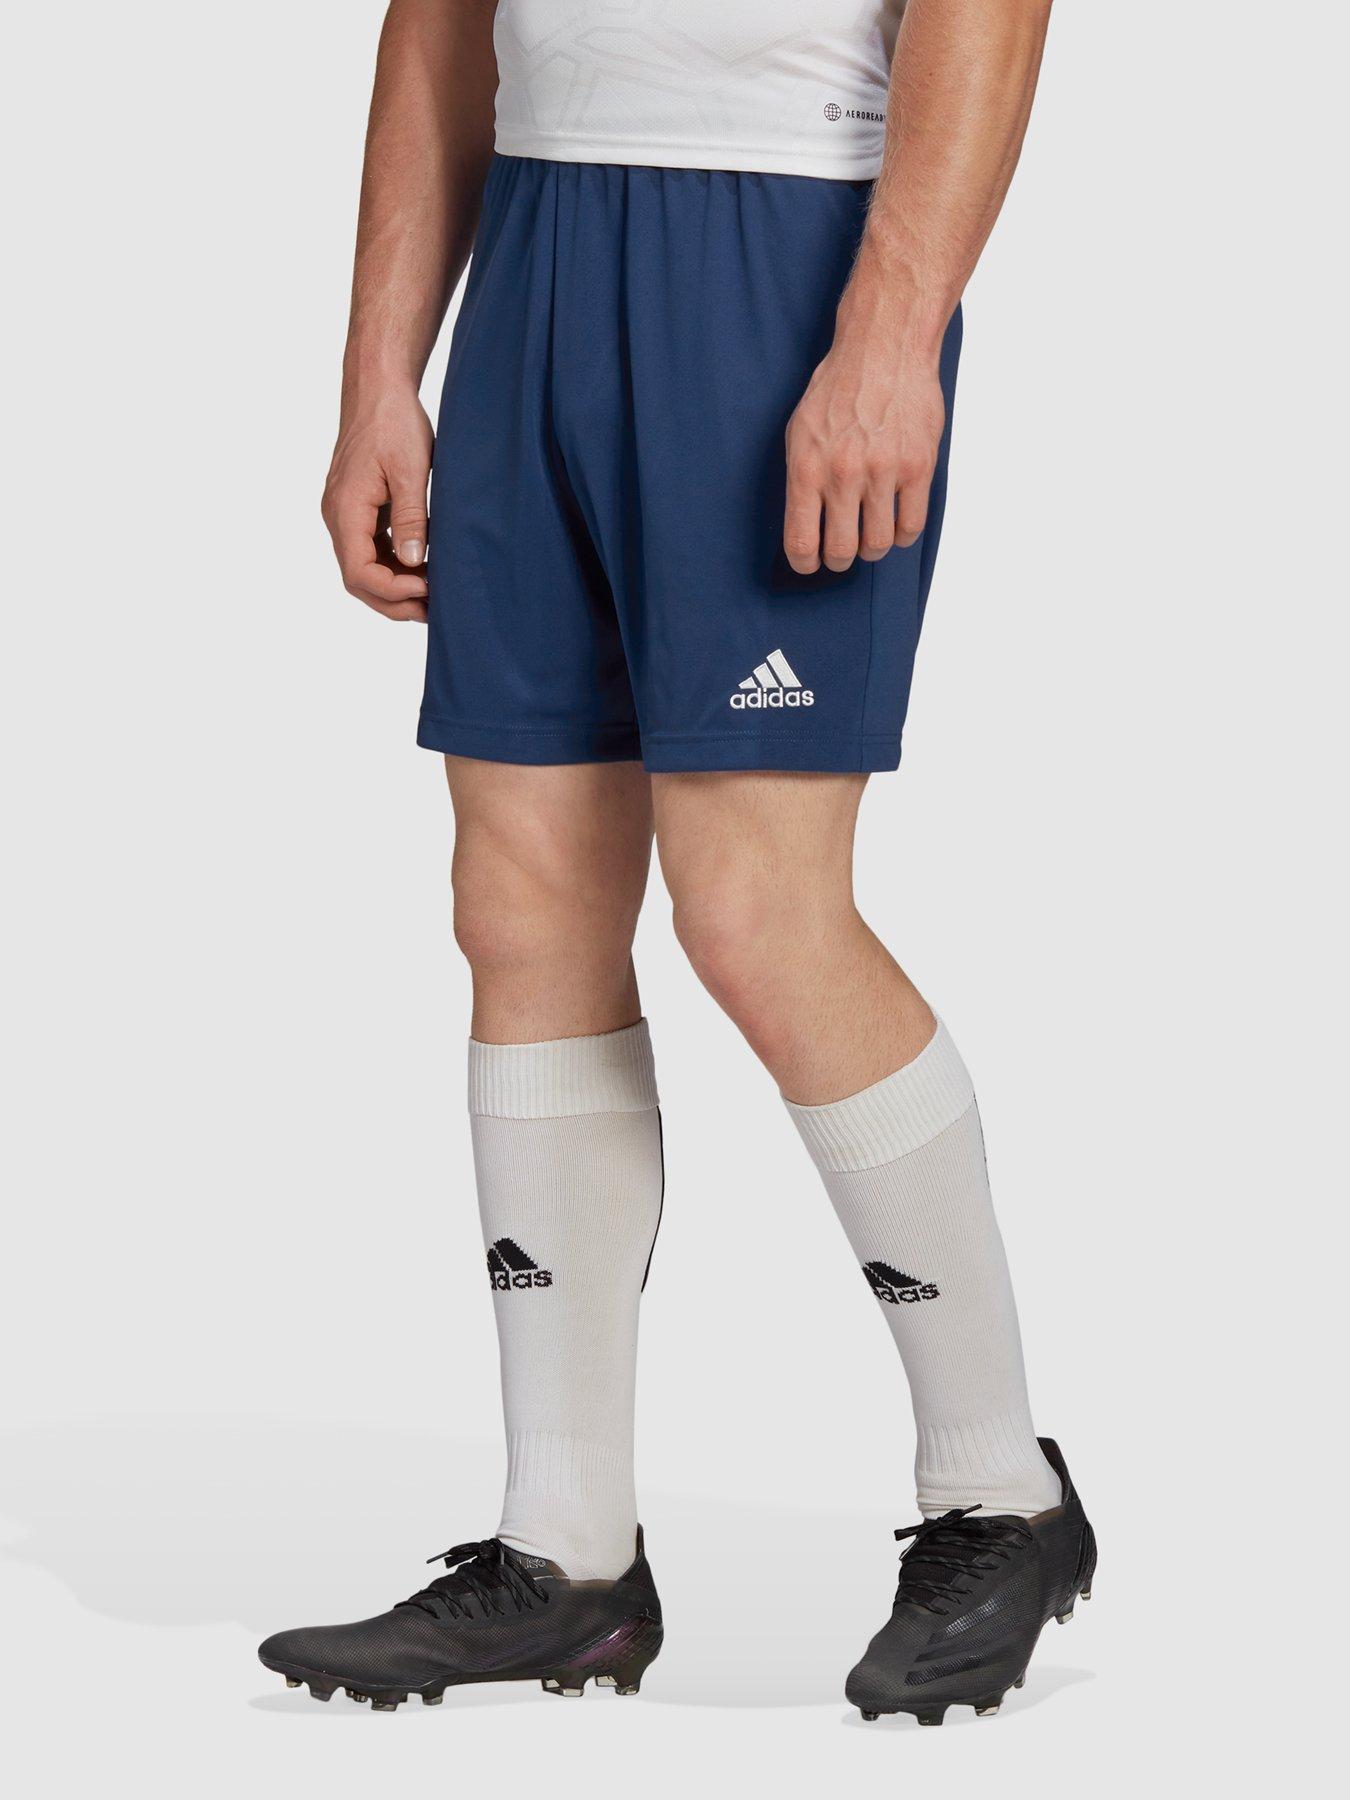 | Adidas Football shorts | Football | Men | Very Ireland